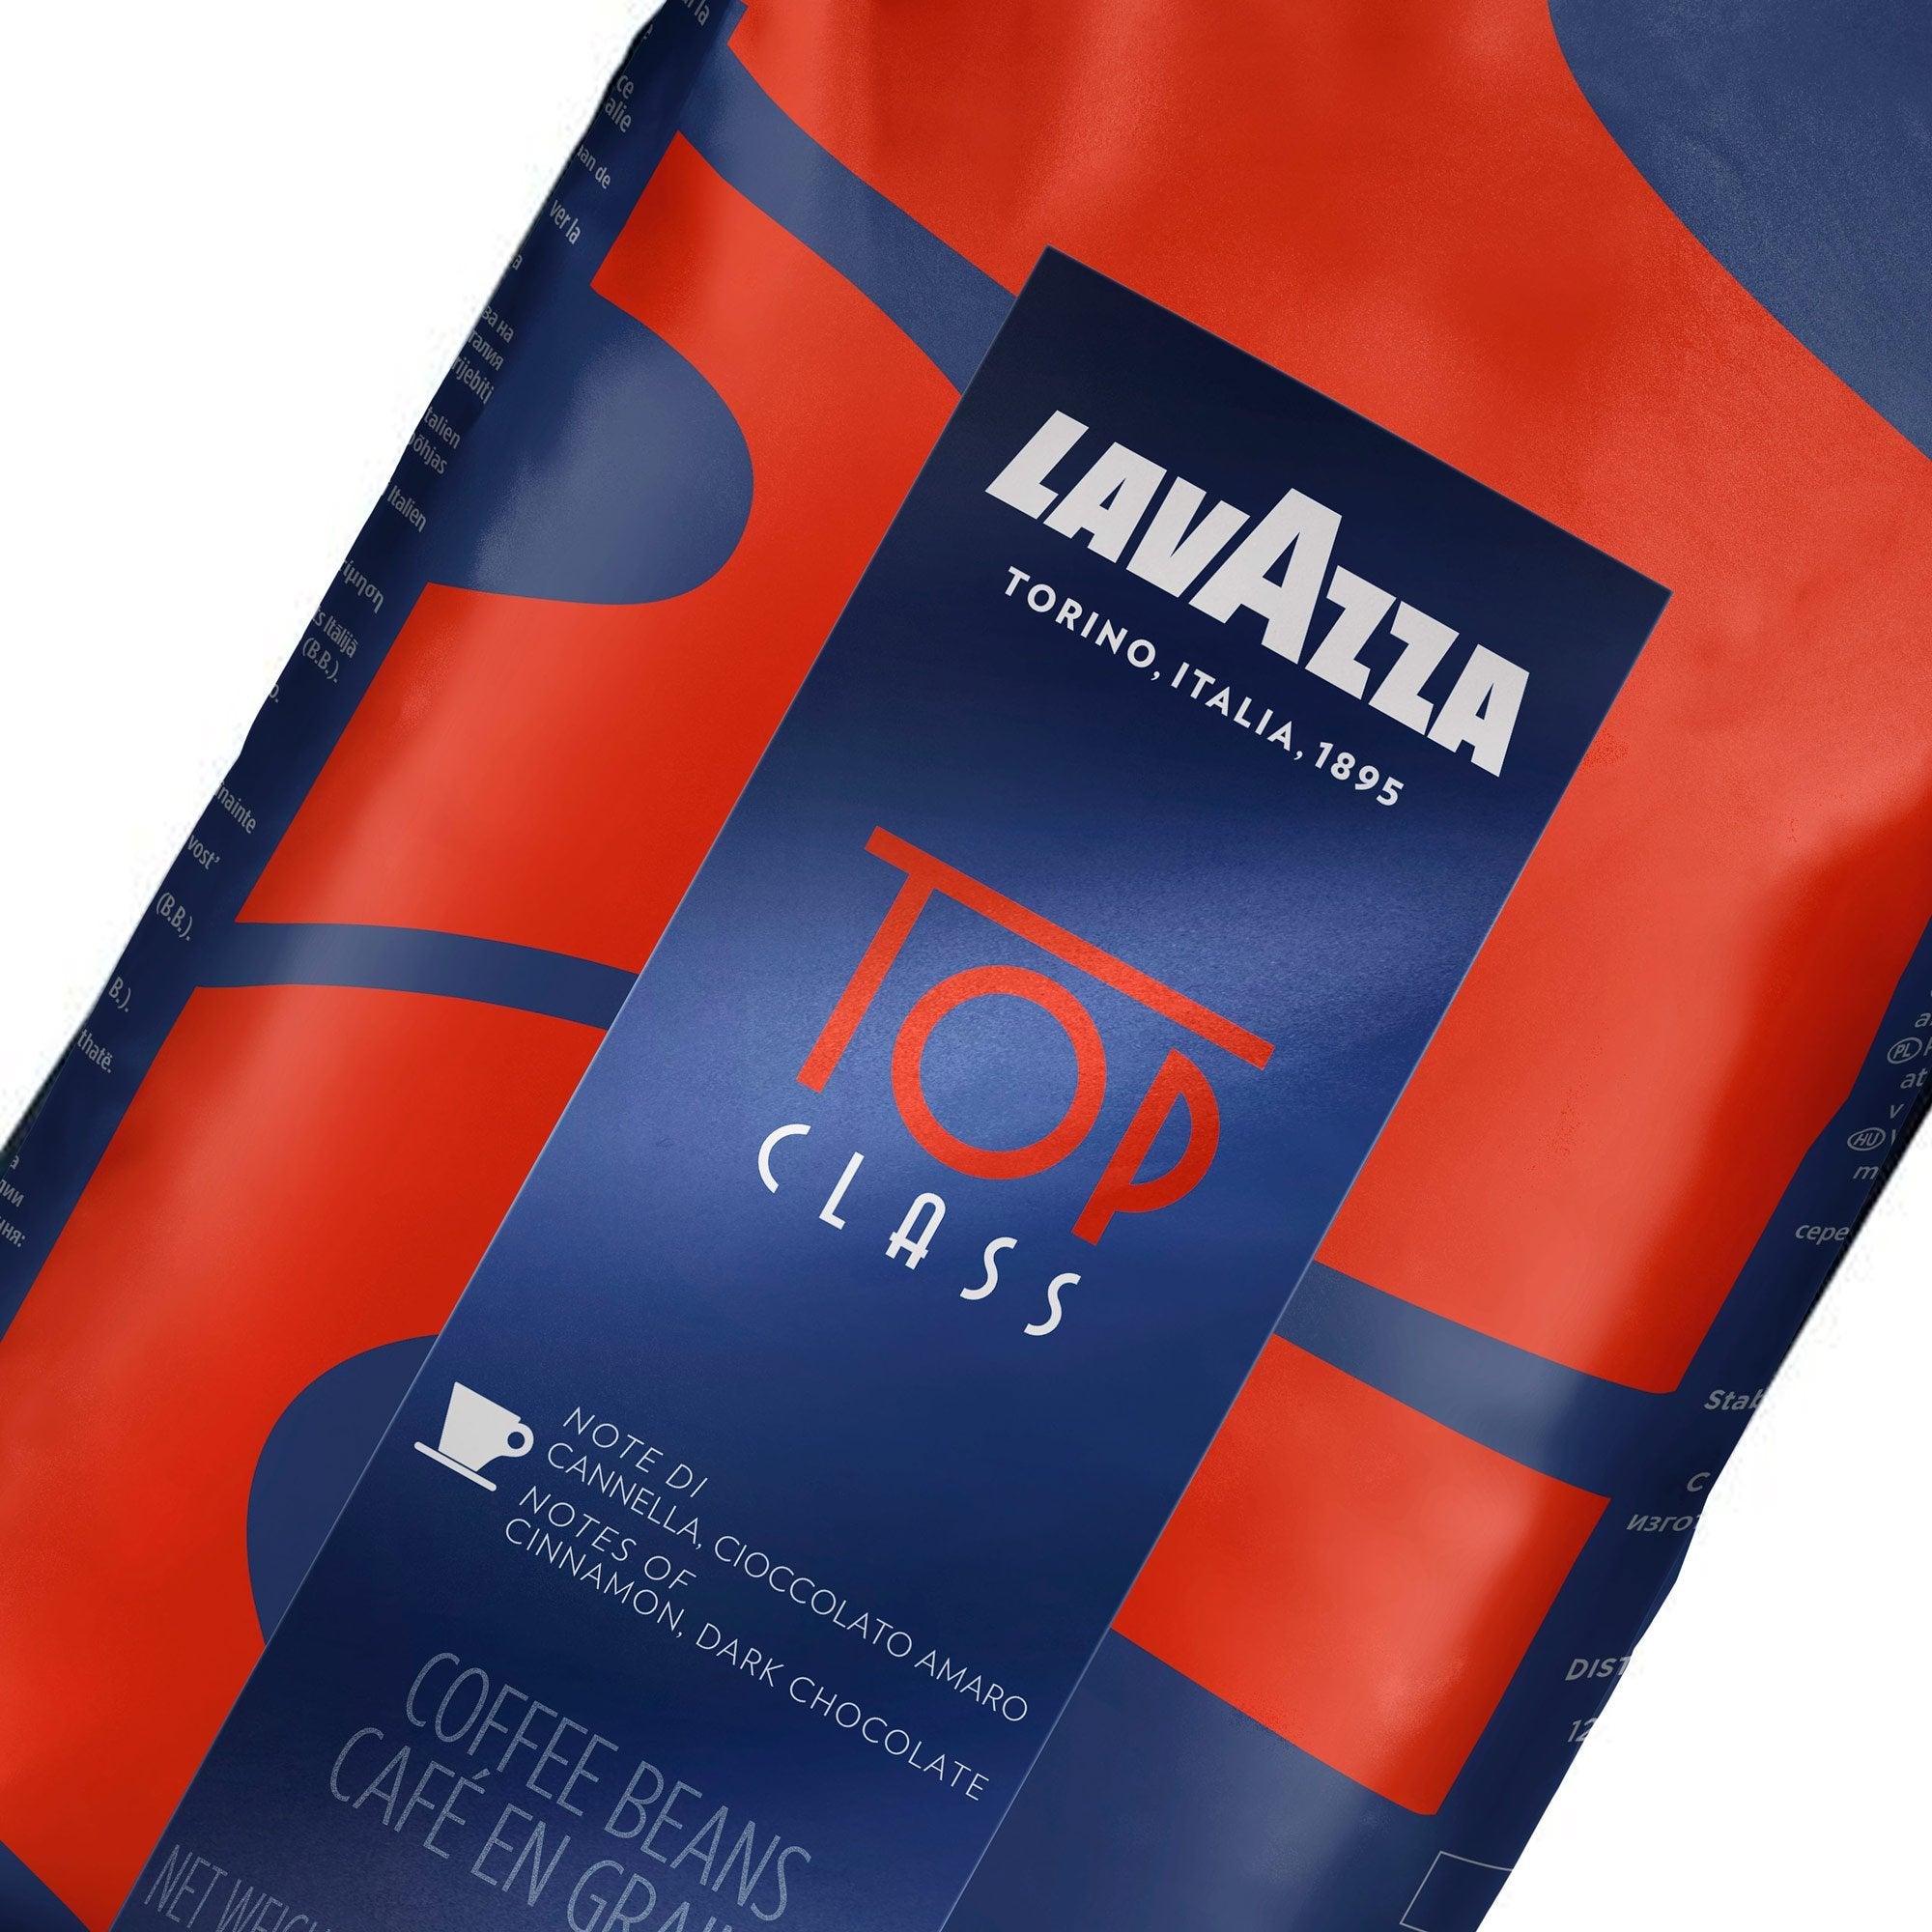 Lavazza Top Class Coffee Beans | Discount & Wholesale Lavazza Coffee